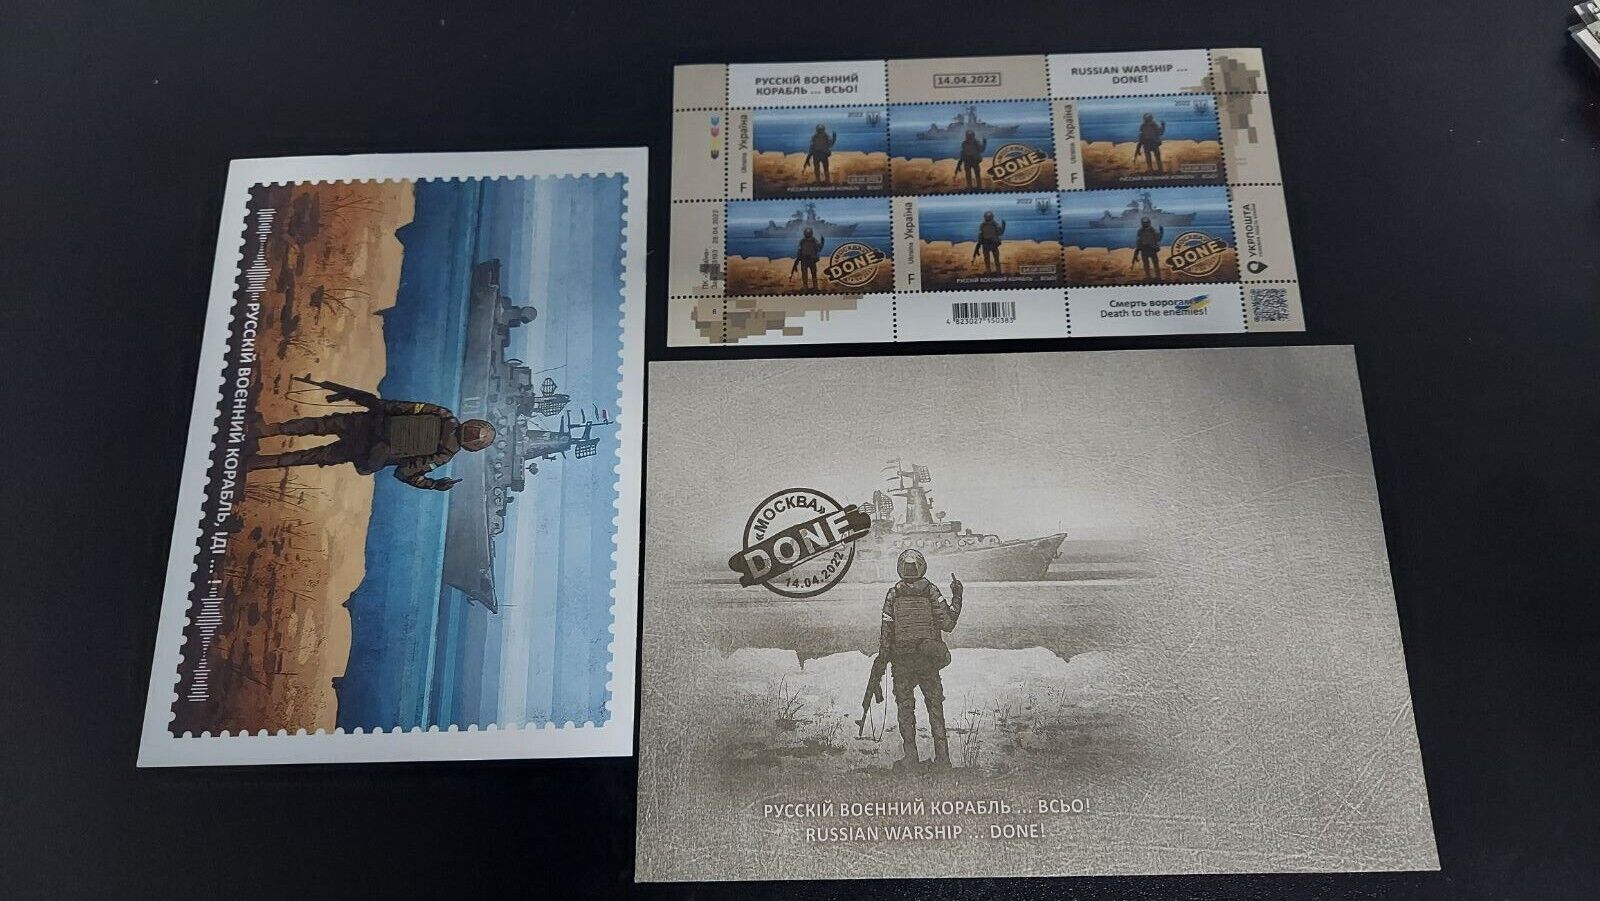 Ukraine 2022 Russian Warship Done Stamp Sheet F + Postcard + Envelope.